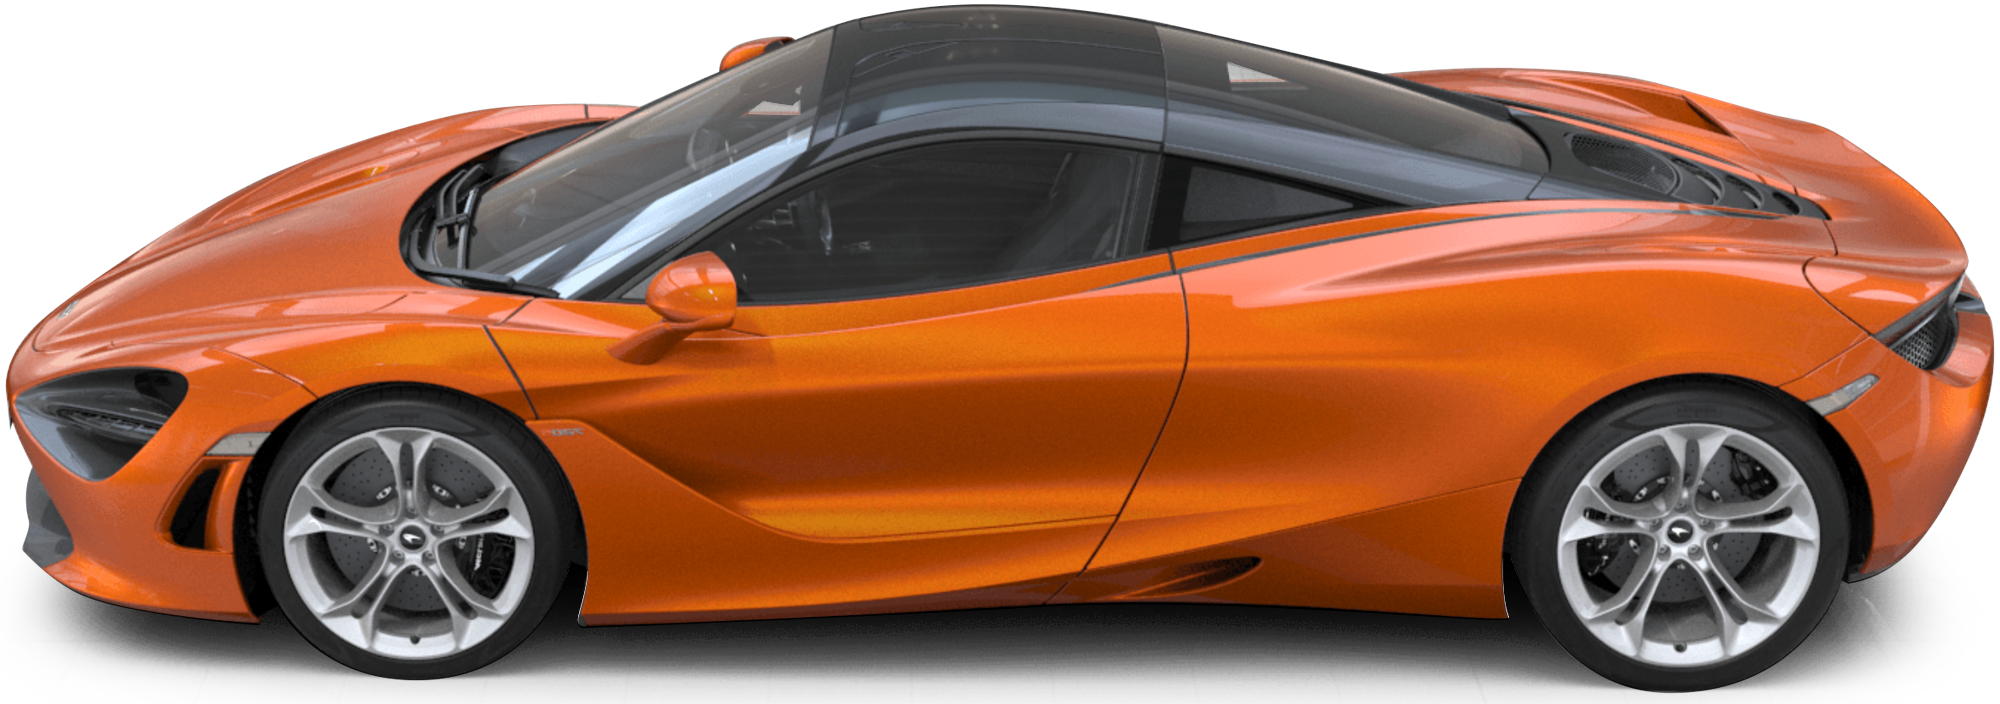 2022 McLaren 720S Coupe 